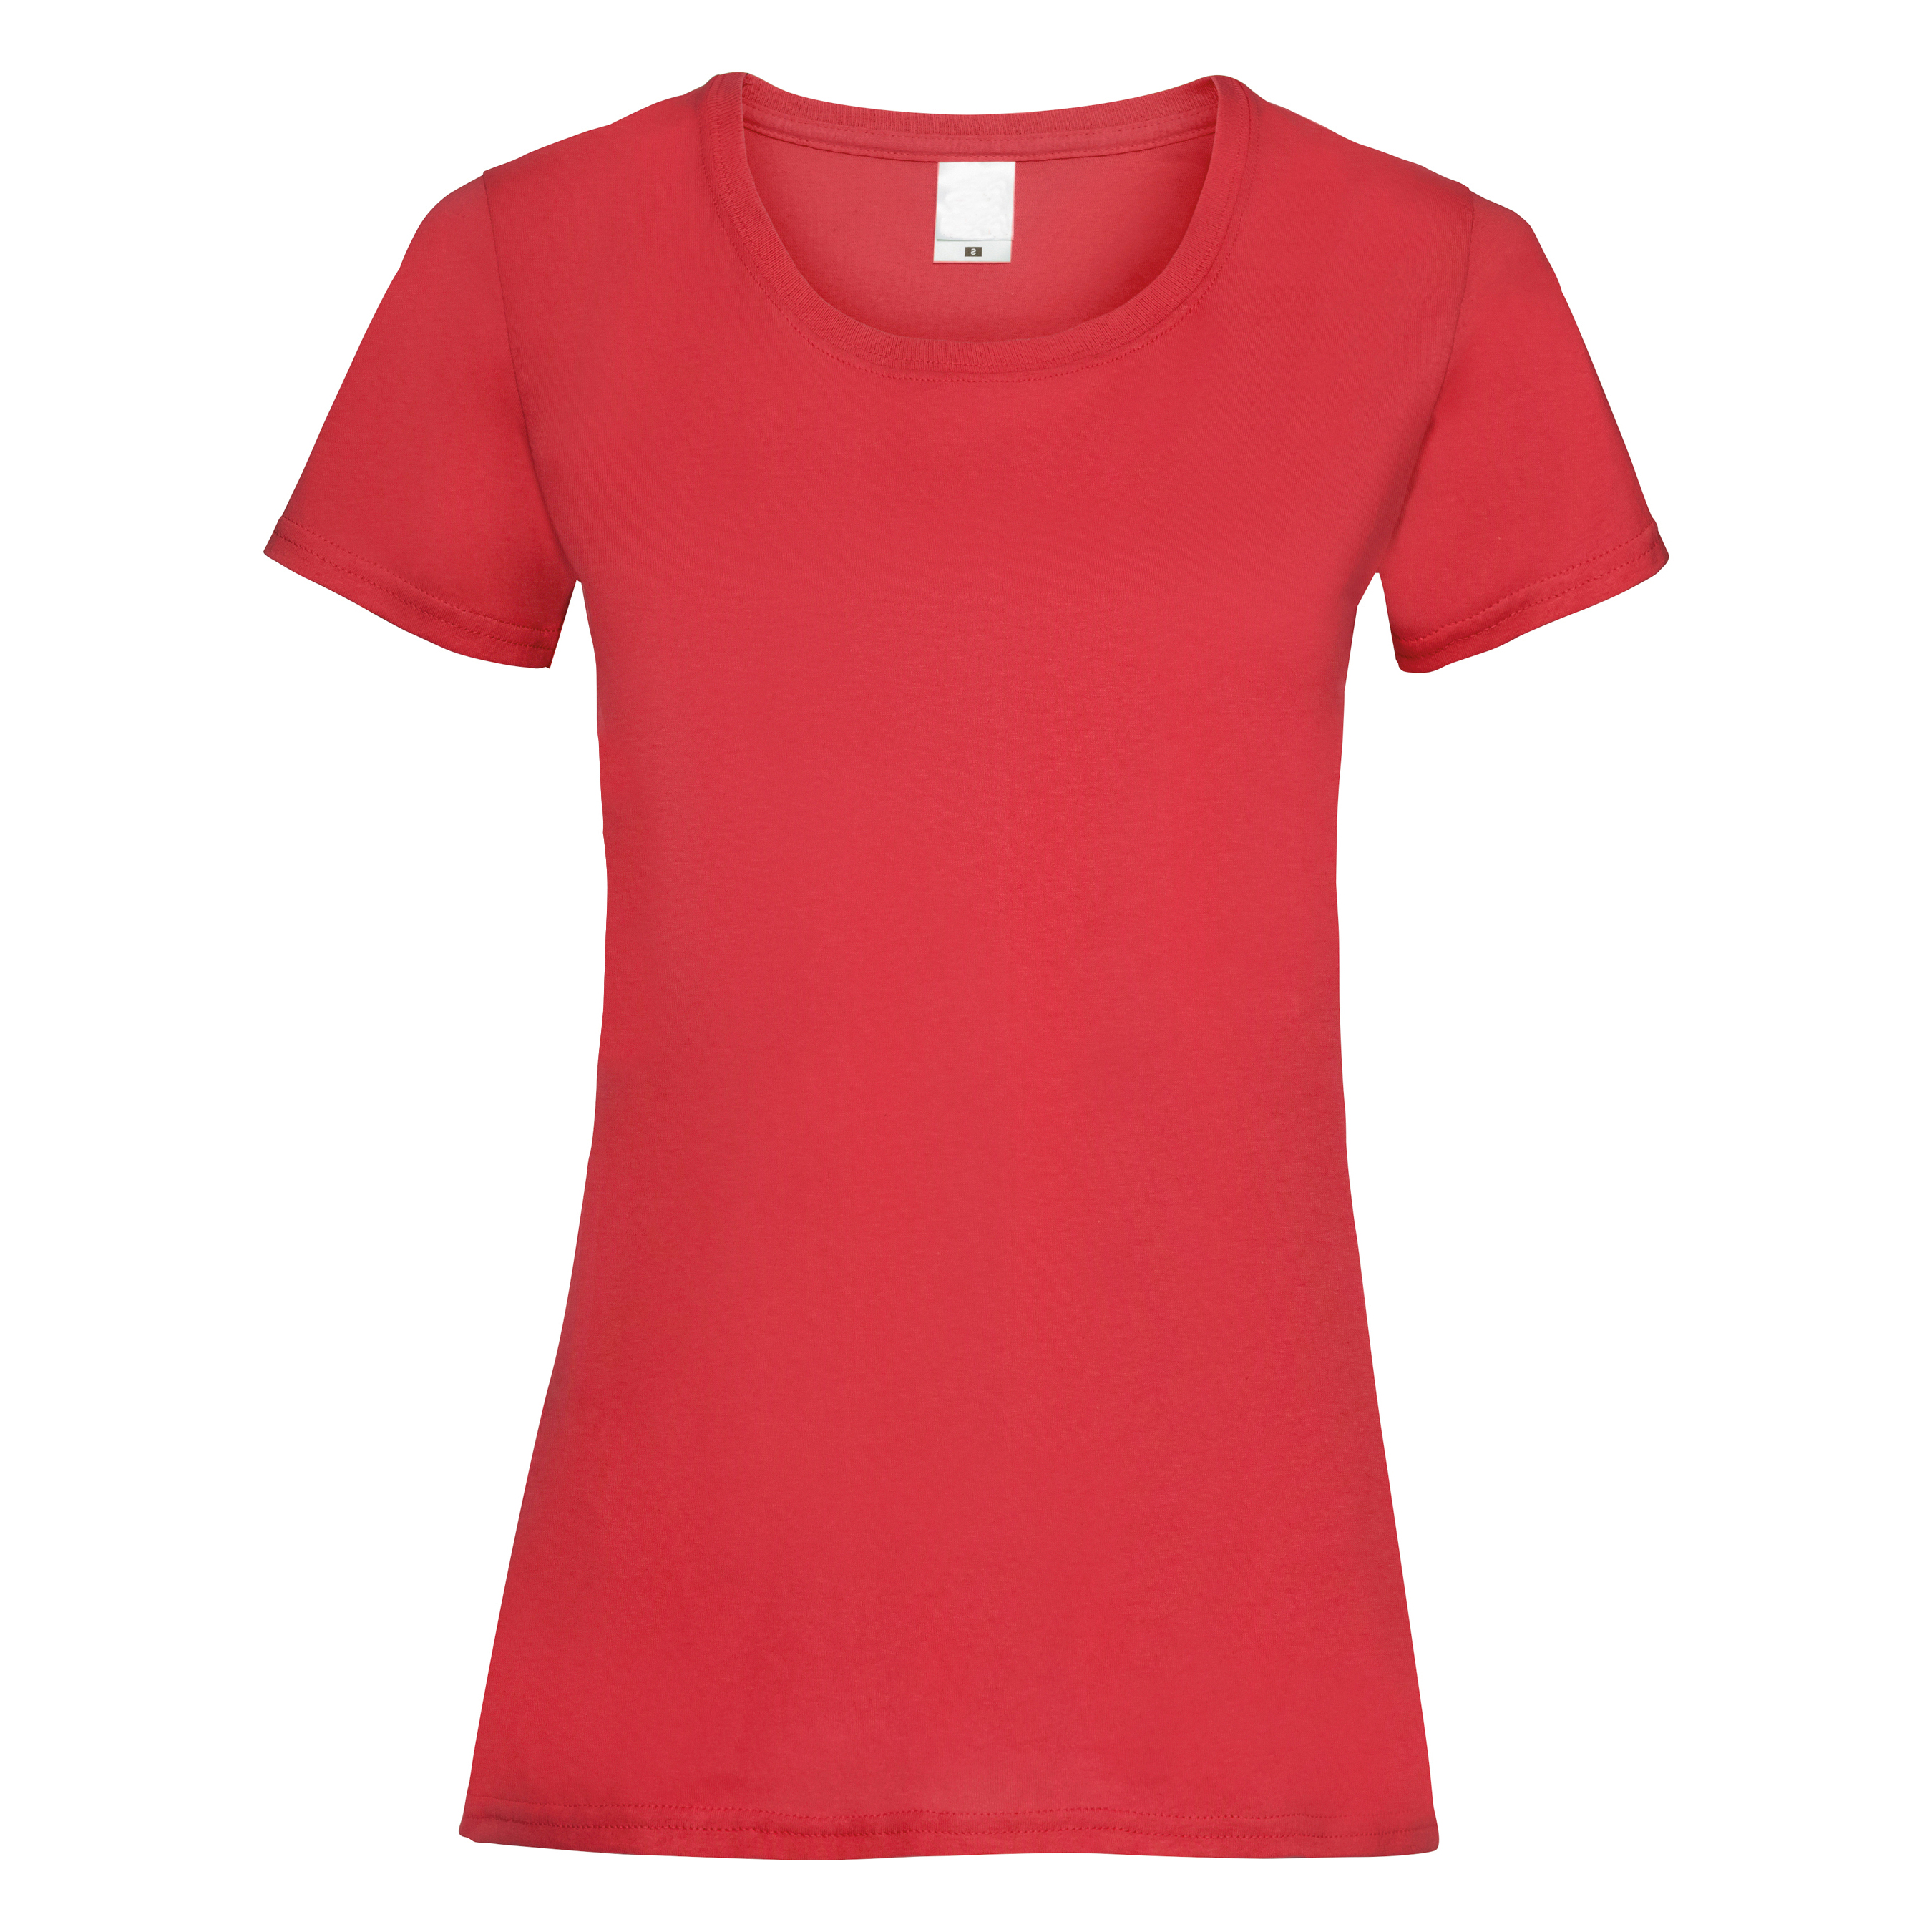 Camiseta Casual De Manga Corta Universal Textiles - rojo - 